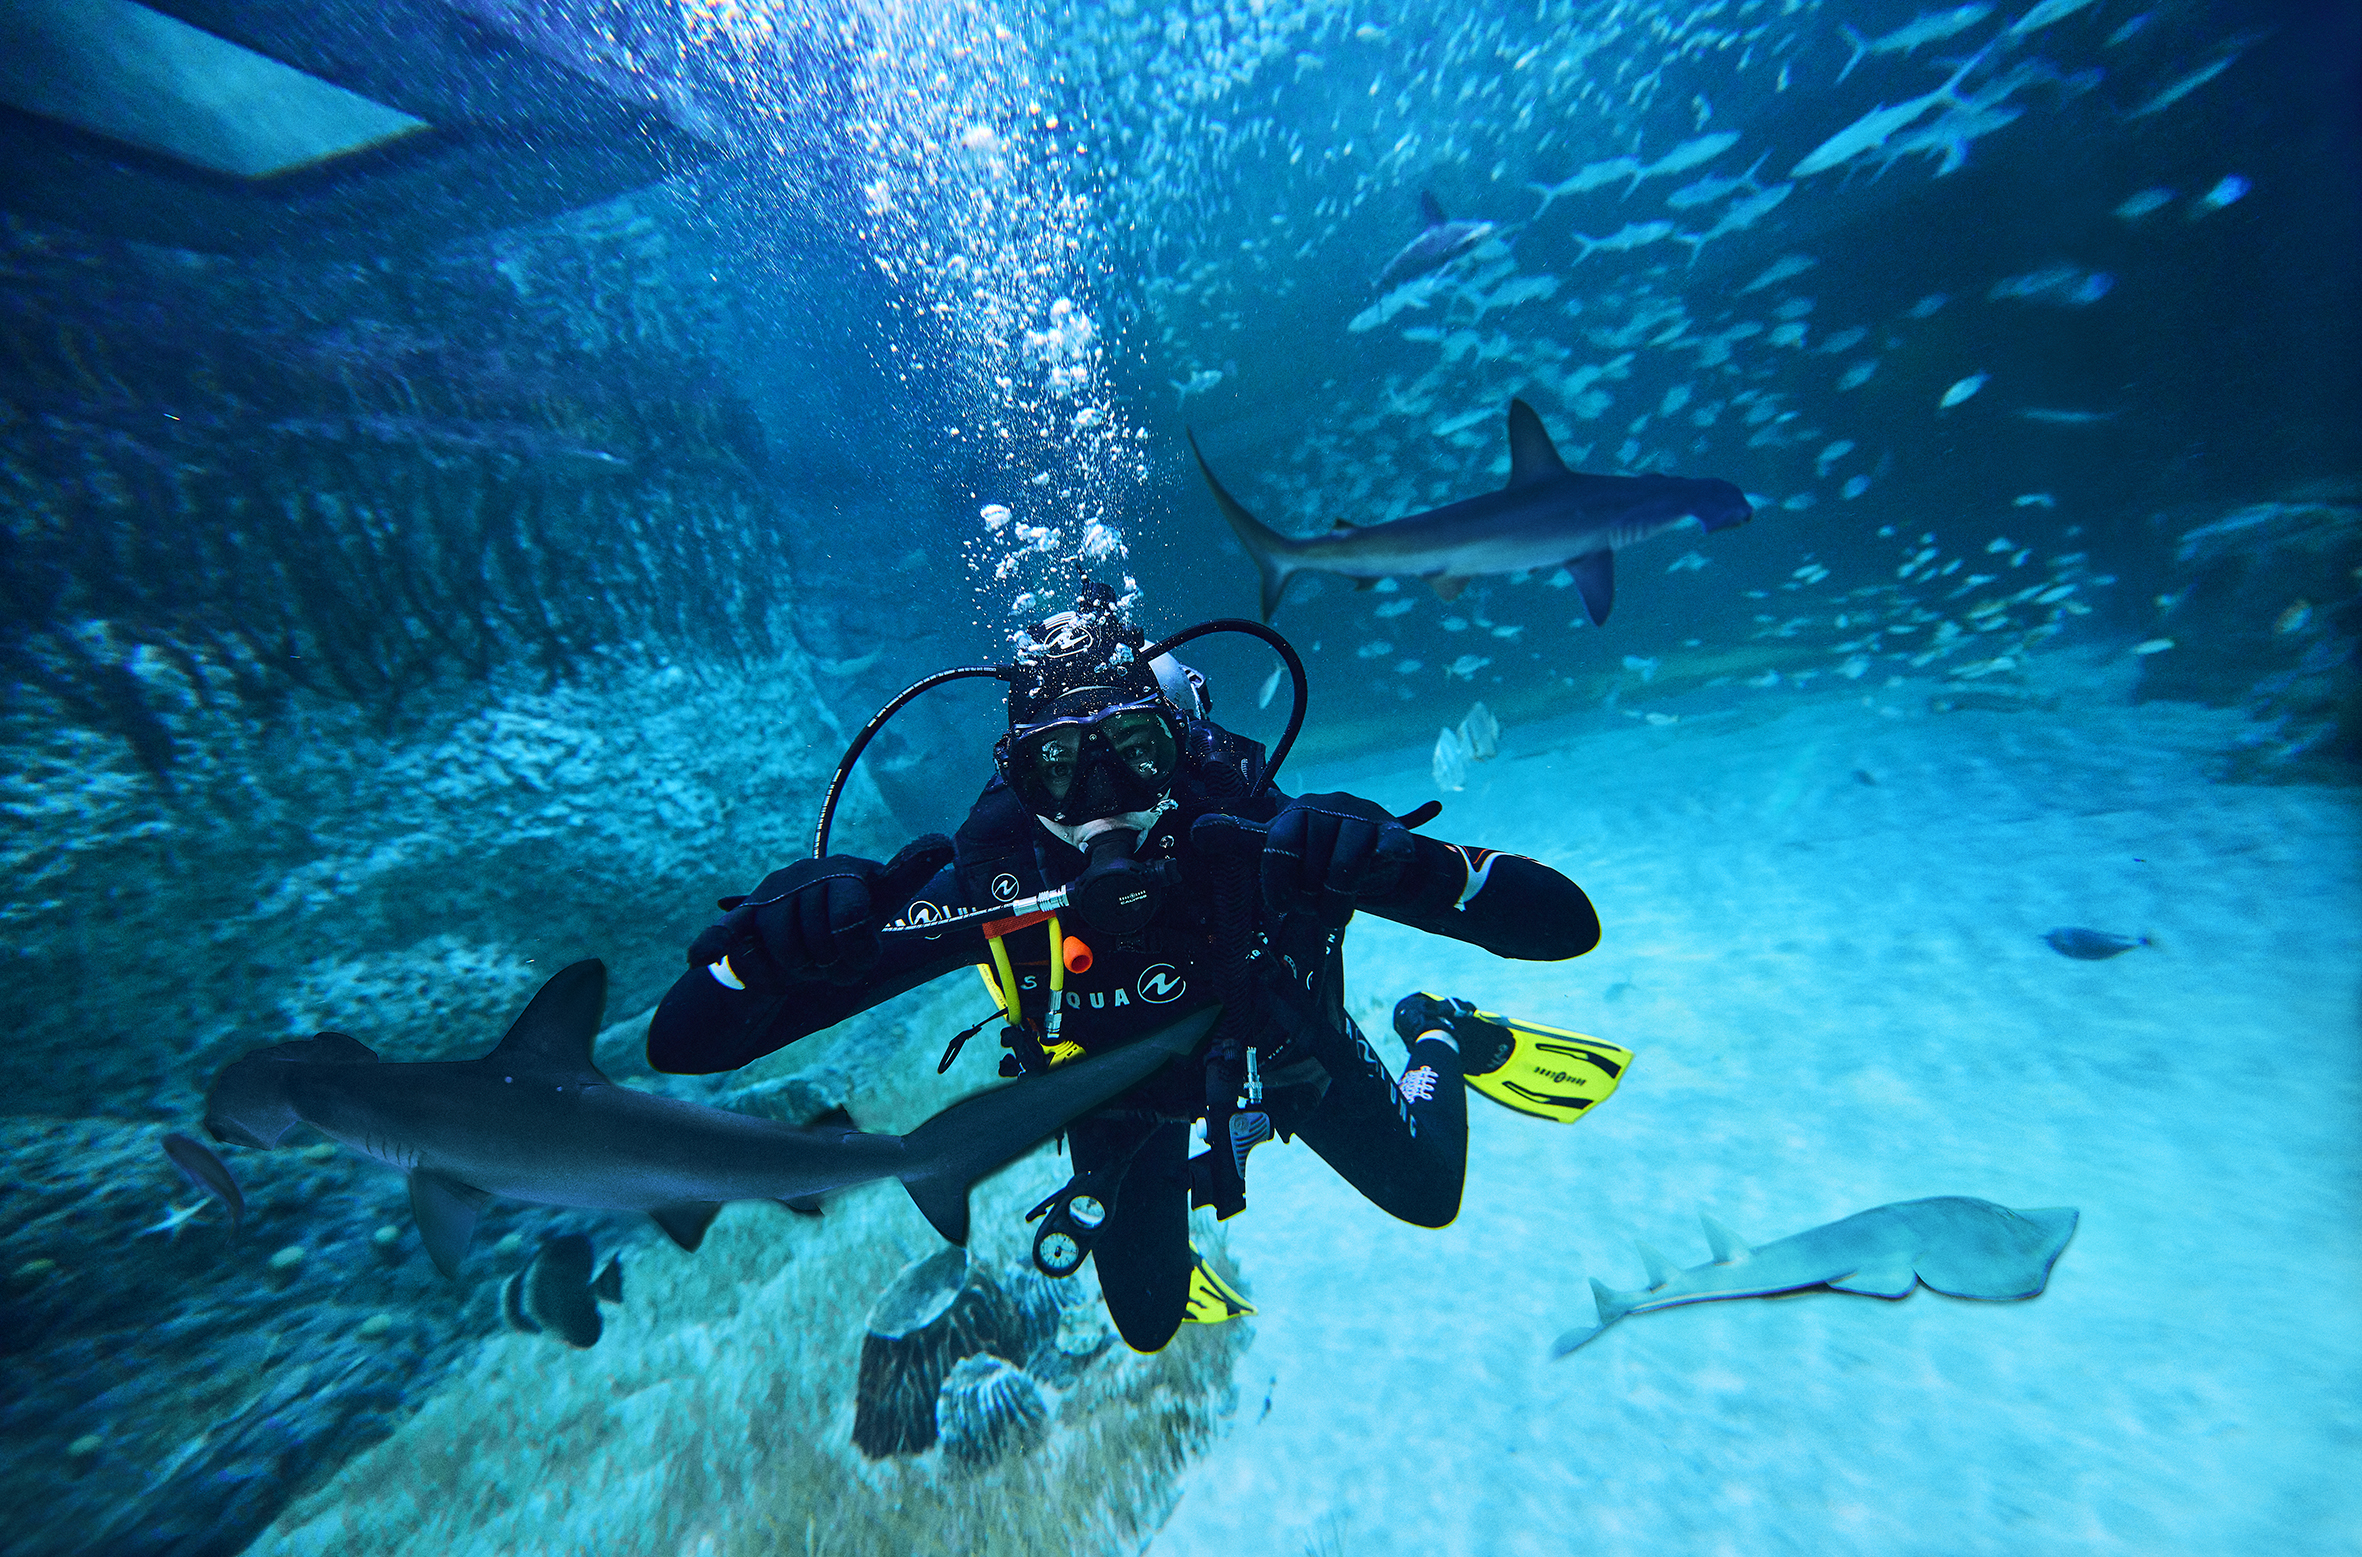 Scuba diver diving amongst sharks at the National Aquarium in Abu Dhabi